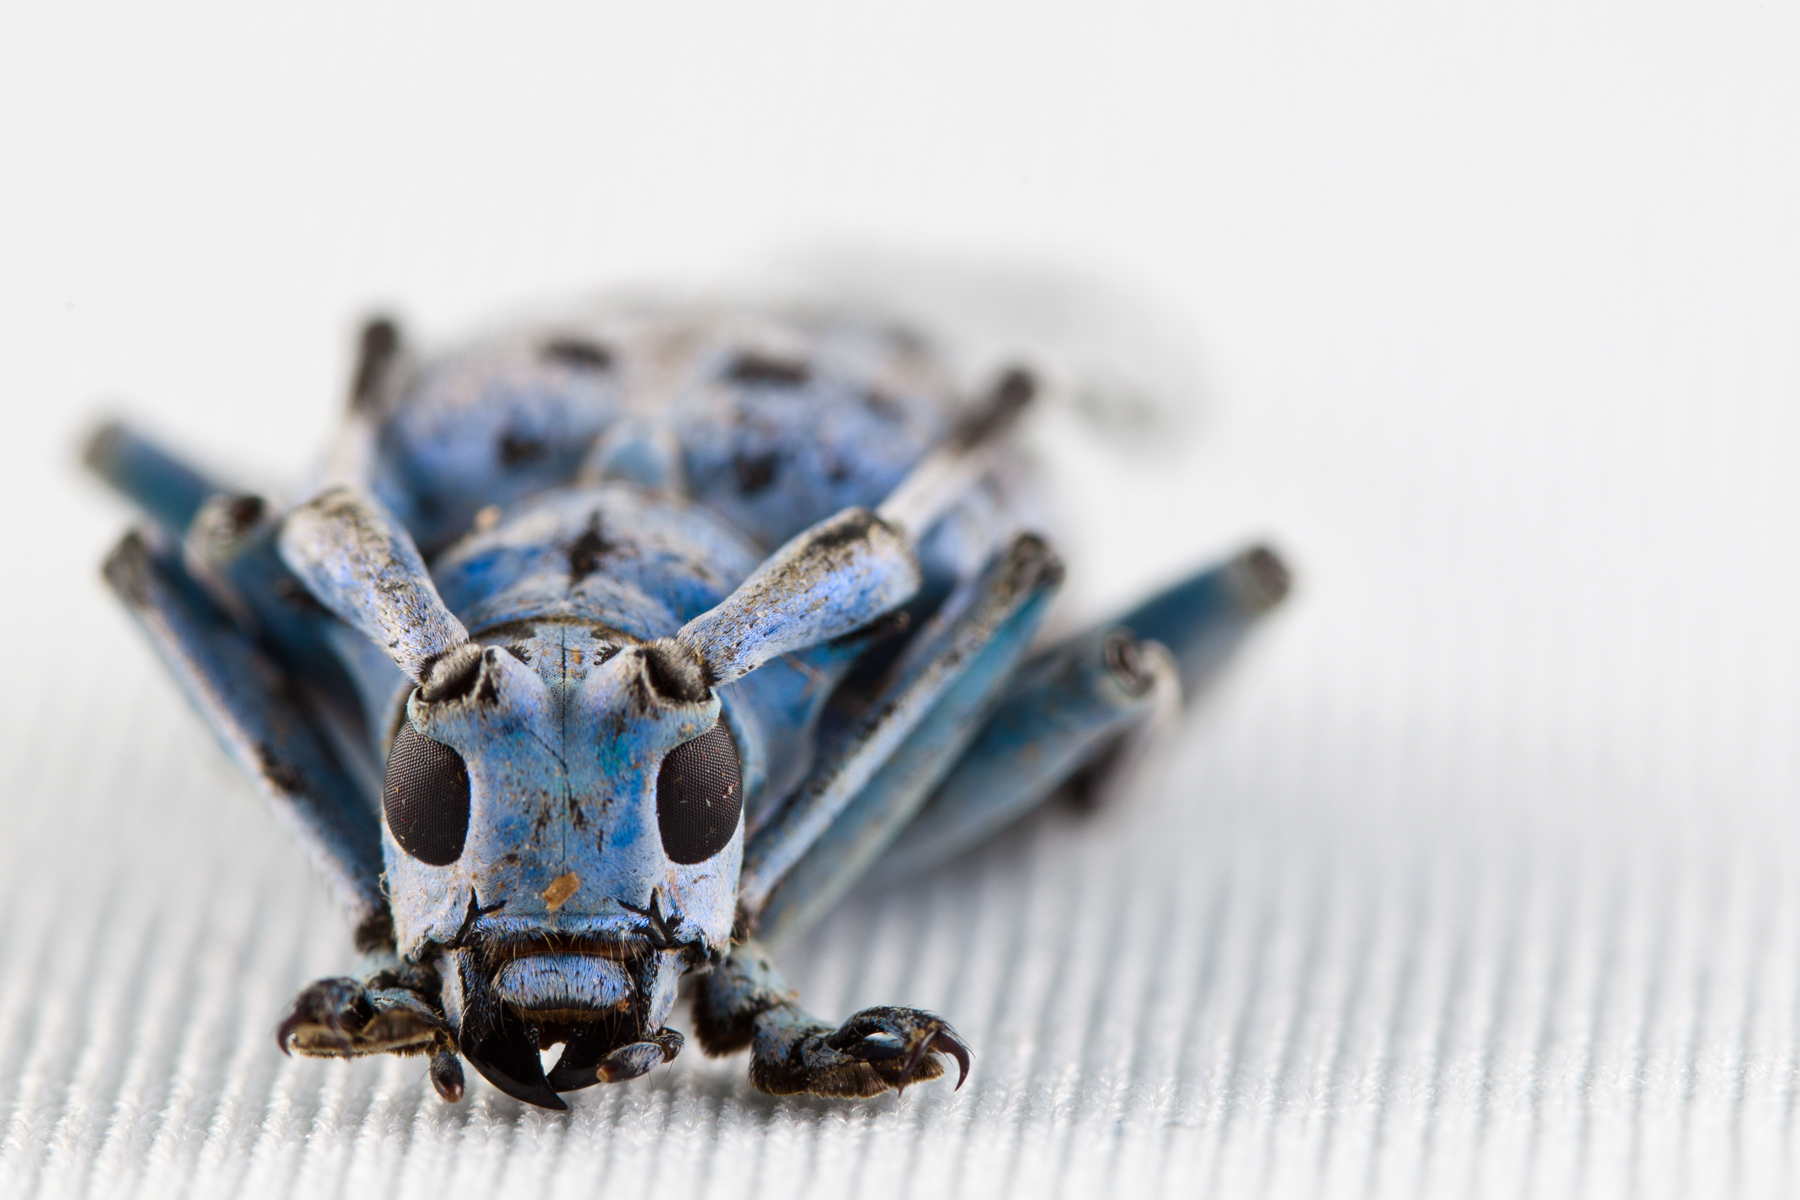 Pseudomyagrus Waterhousei Beetles